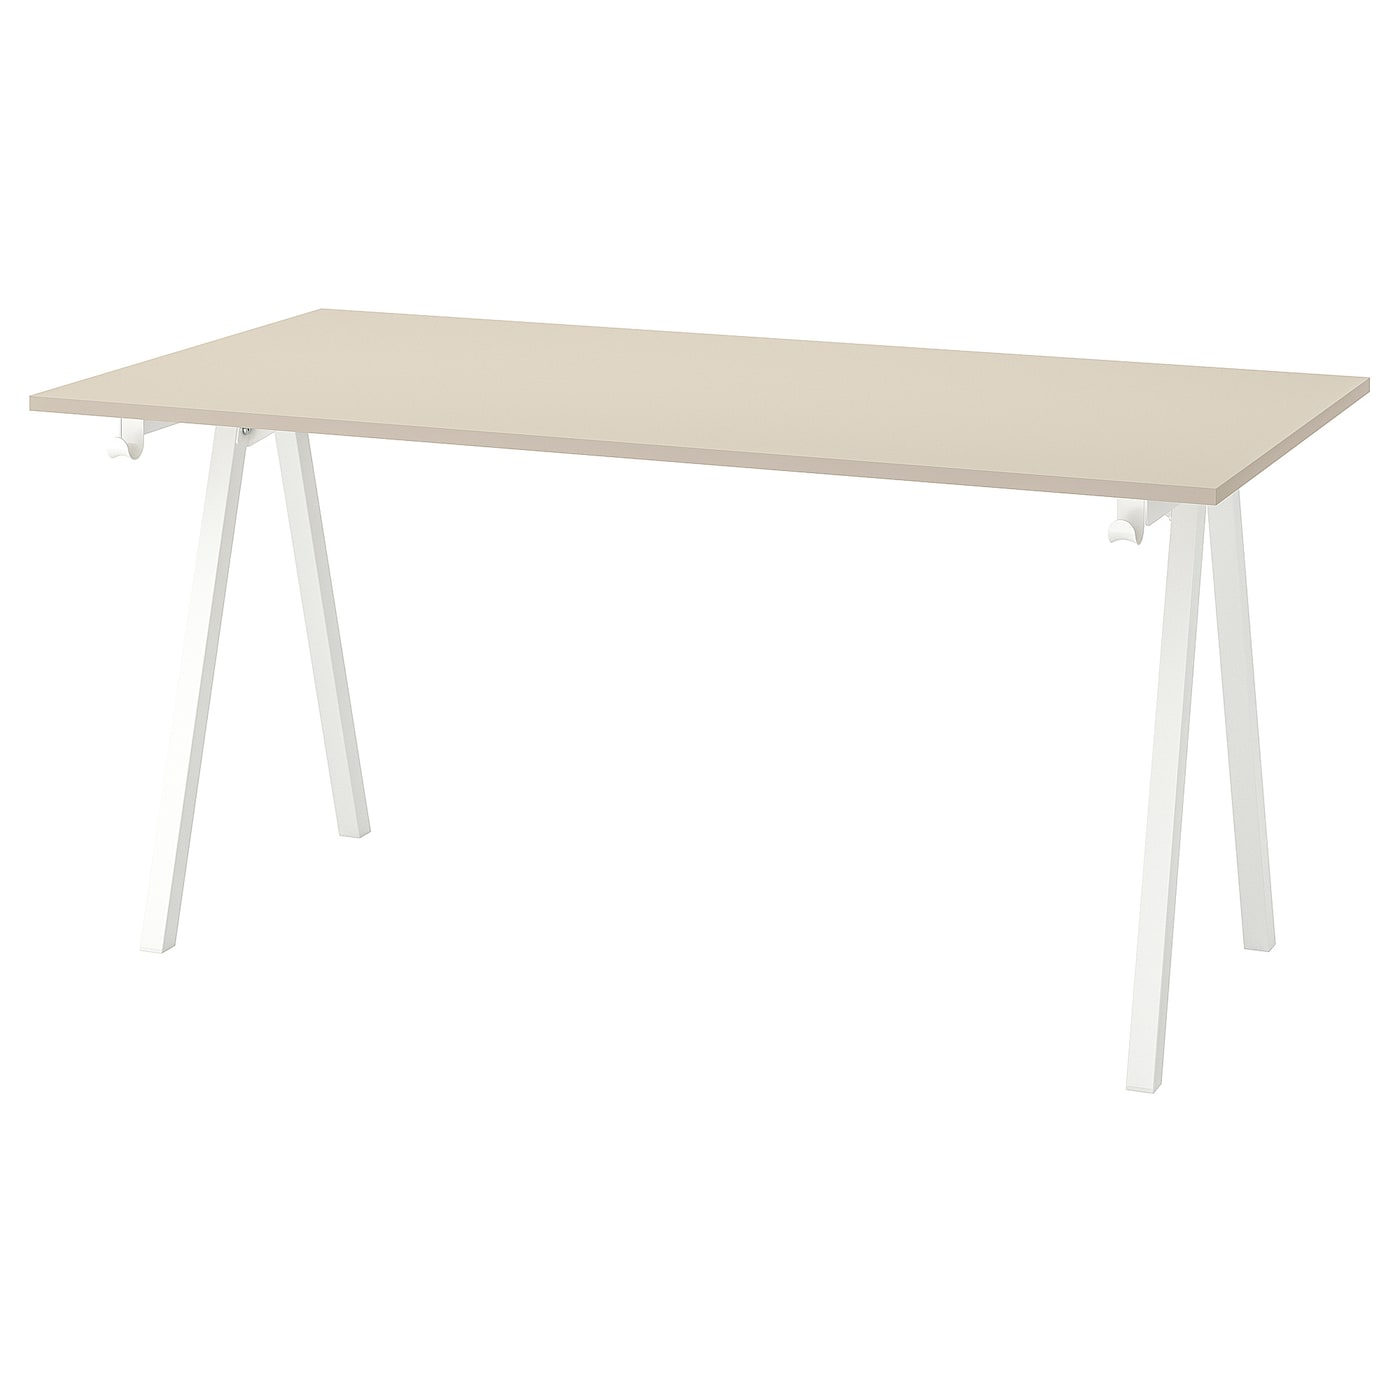 Письменный стол  - IKEA TROTTEN  /ТРОТТЕН ИКЕА, 160х75 см, бежевый